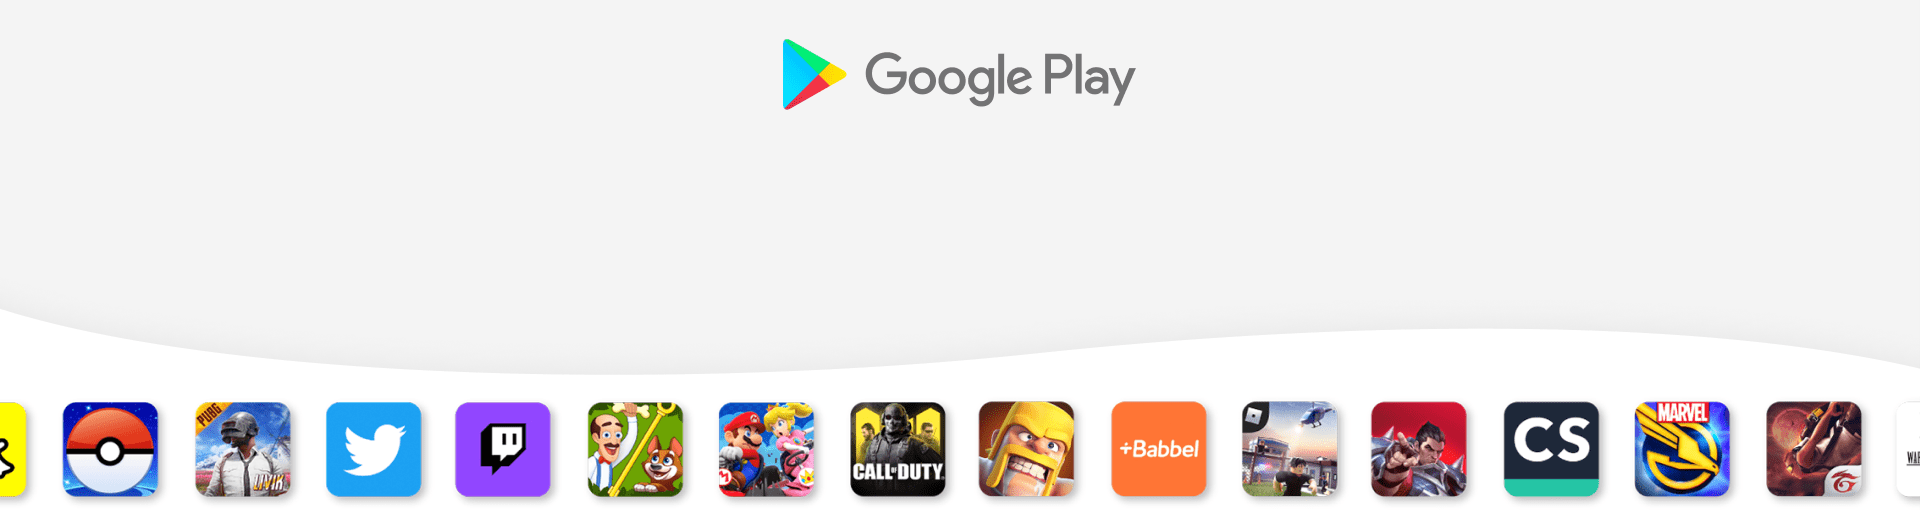 google play - offerta - WINDTRE